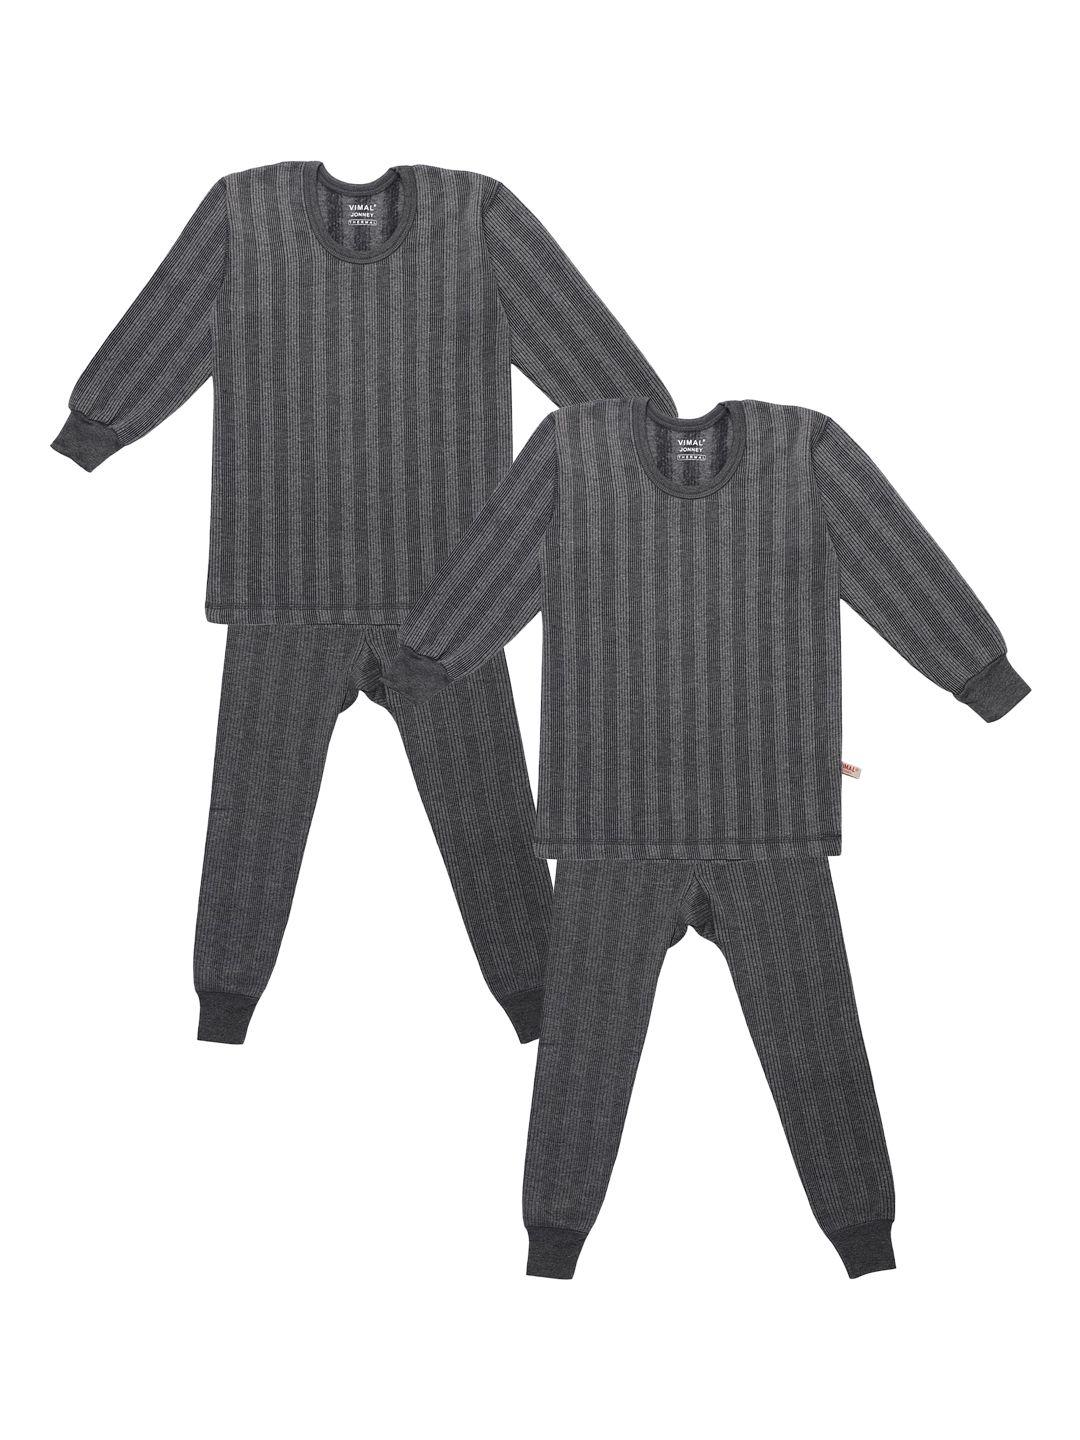 vimal jonney kids pack of 2 grey striped thermal set